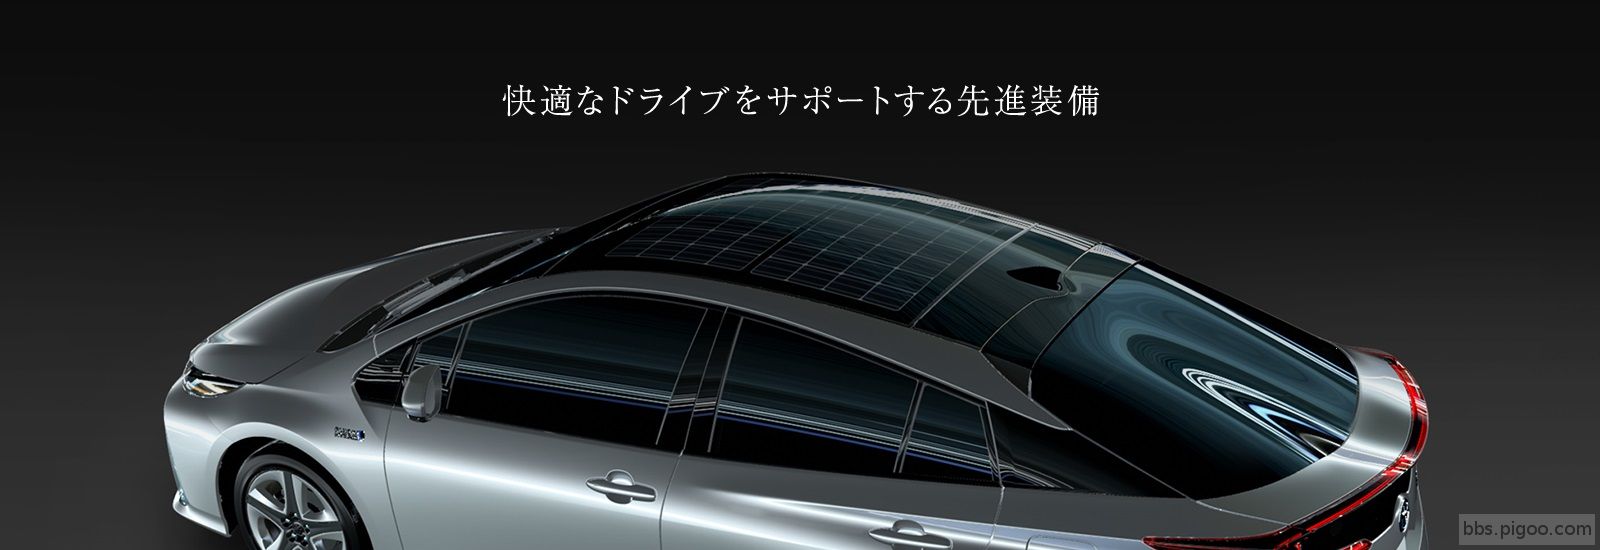 Toyota-Prius-Prime-solar-panel-roof.jpg